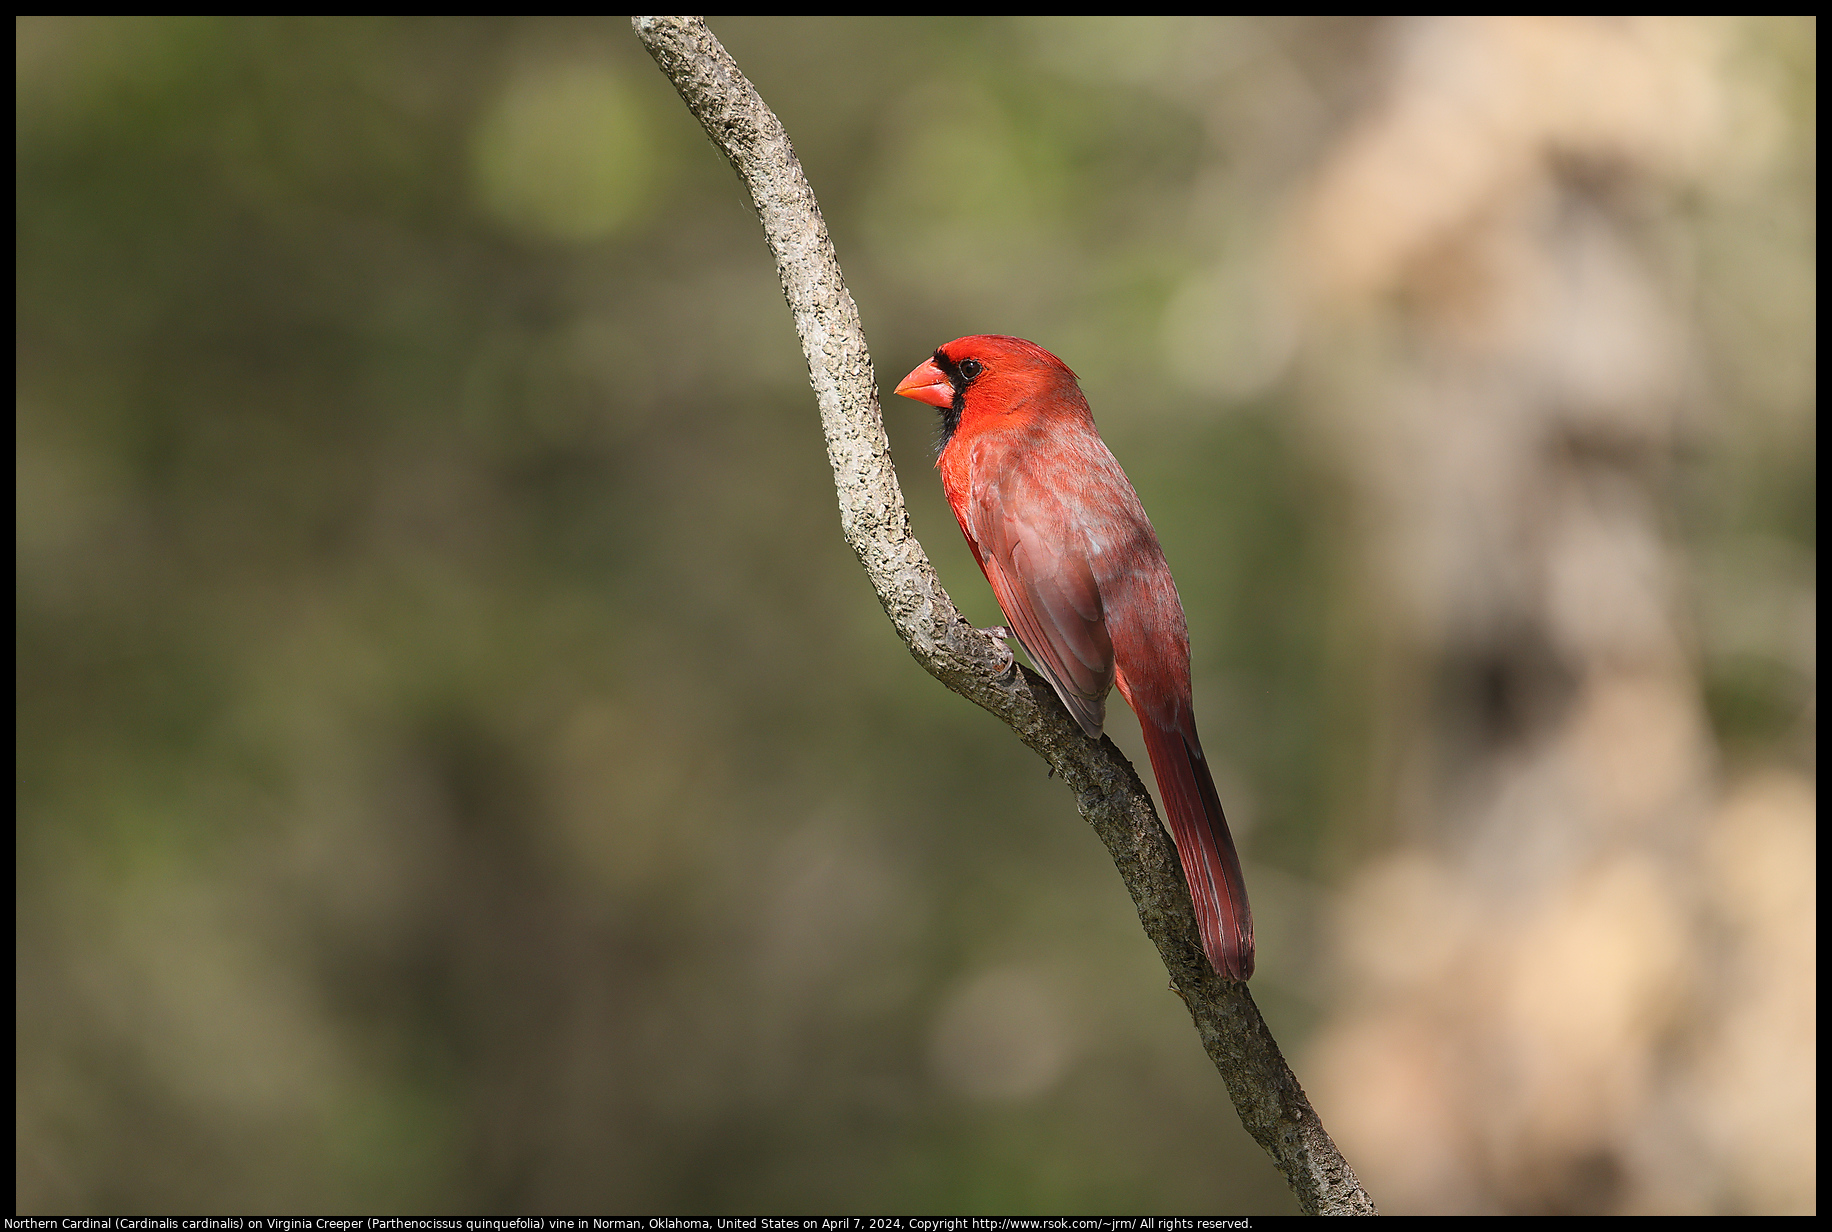 Northern Cardinal (Cardinalis cardinalis) in Norman, Oklahoma, United States on April 7, 2024